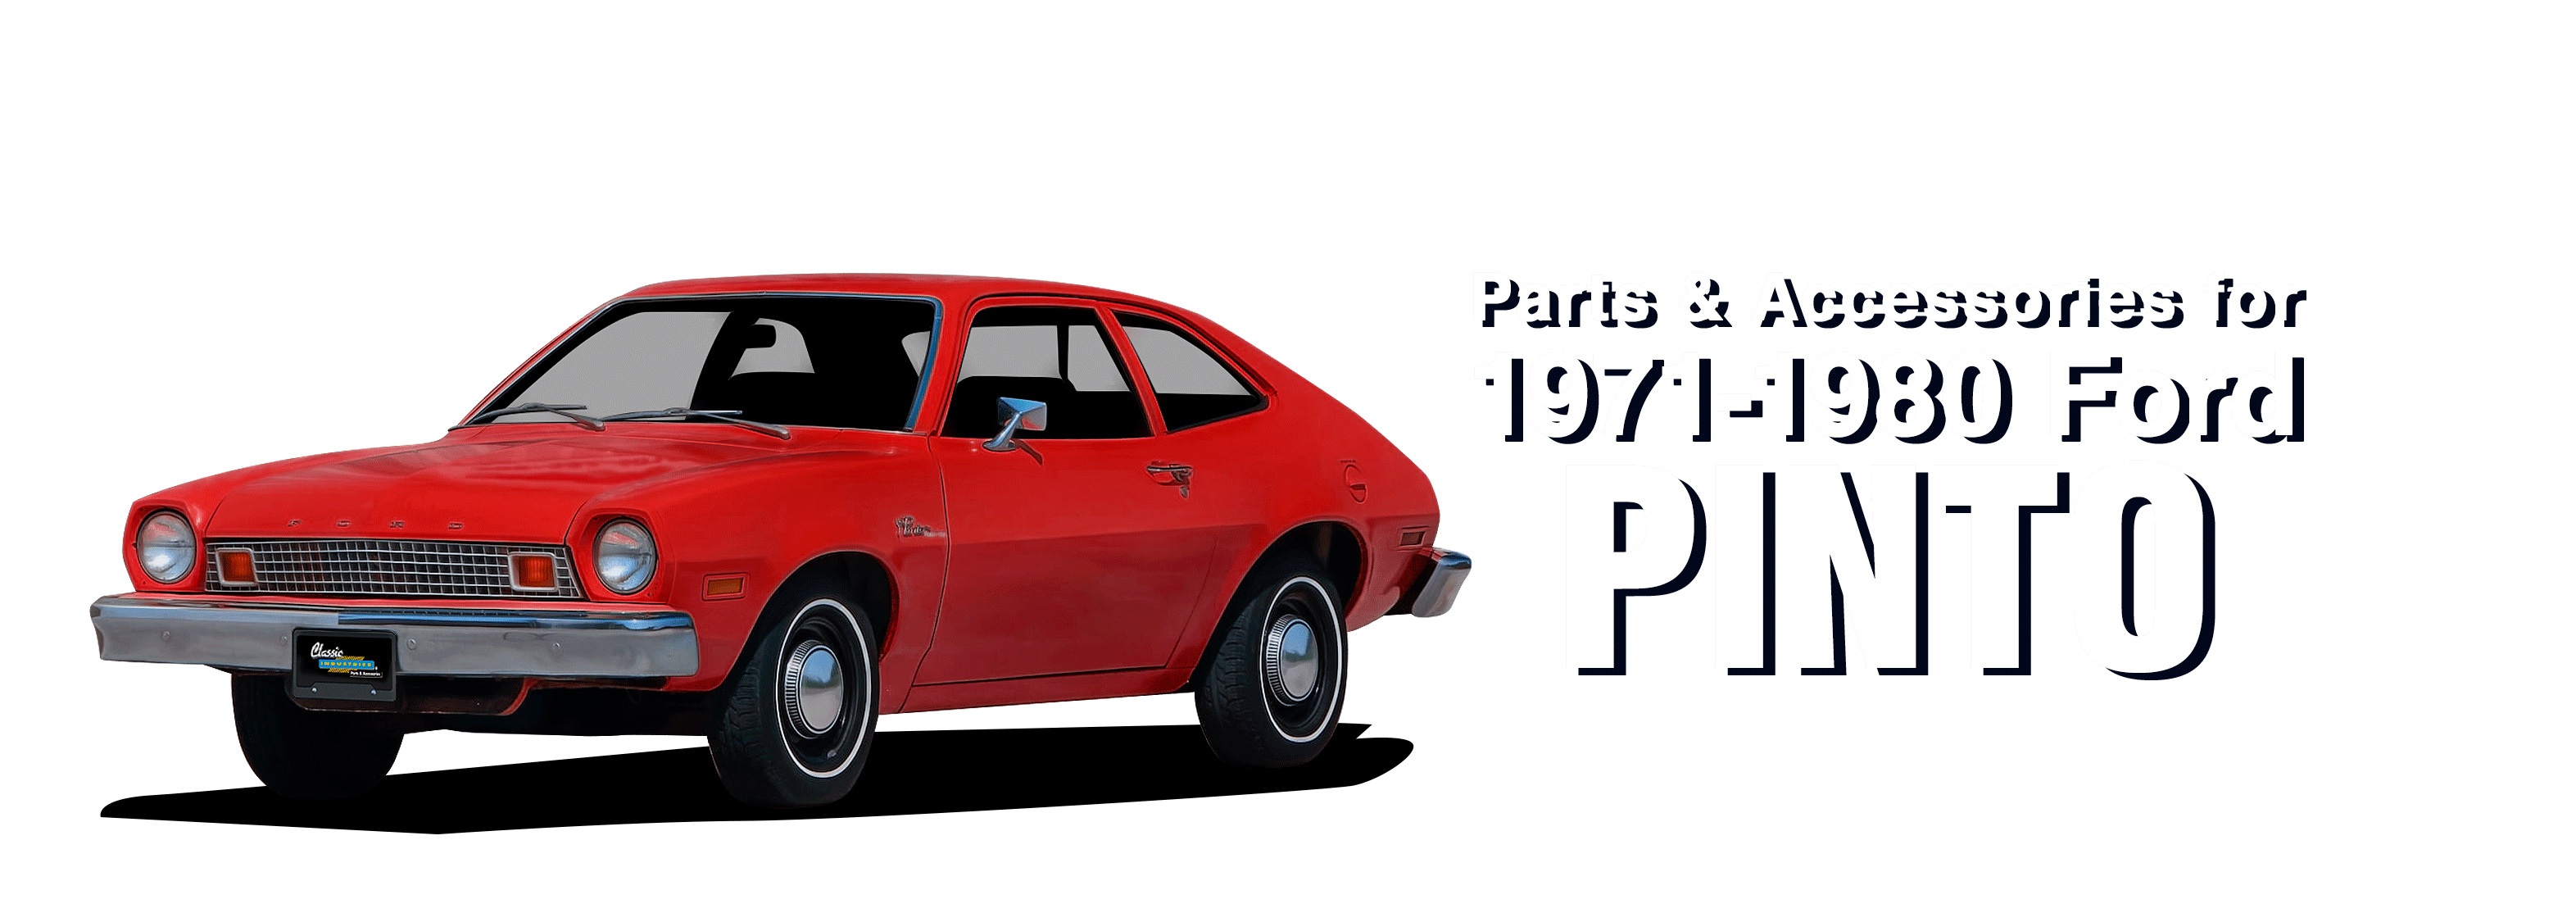 1971-1980 Ford Pinto desktop